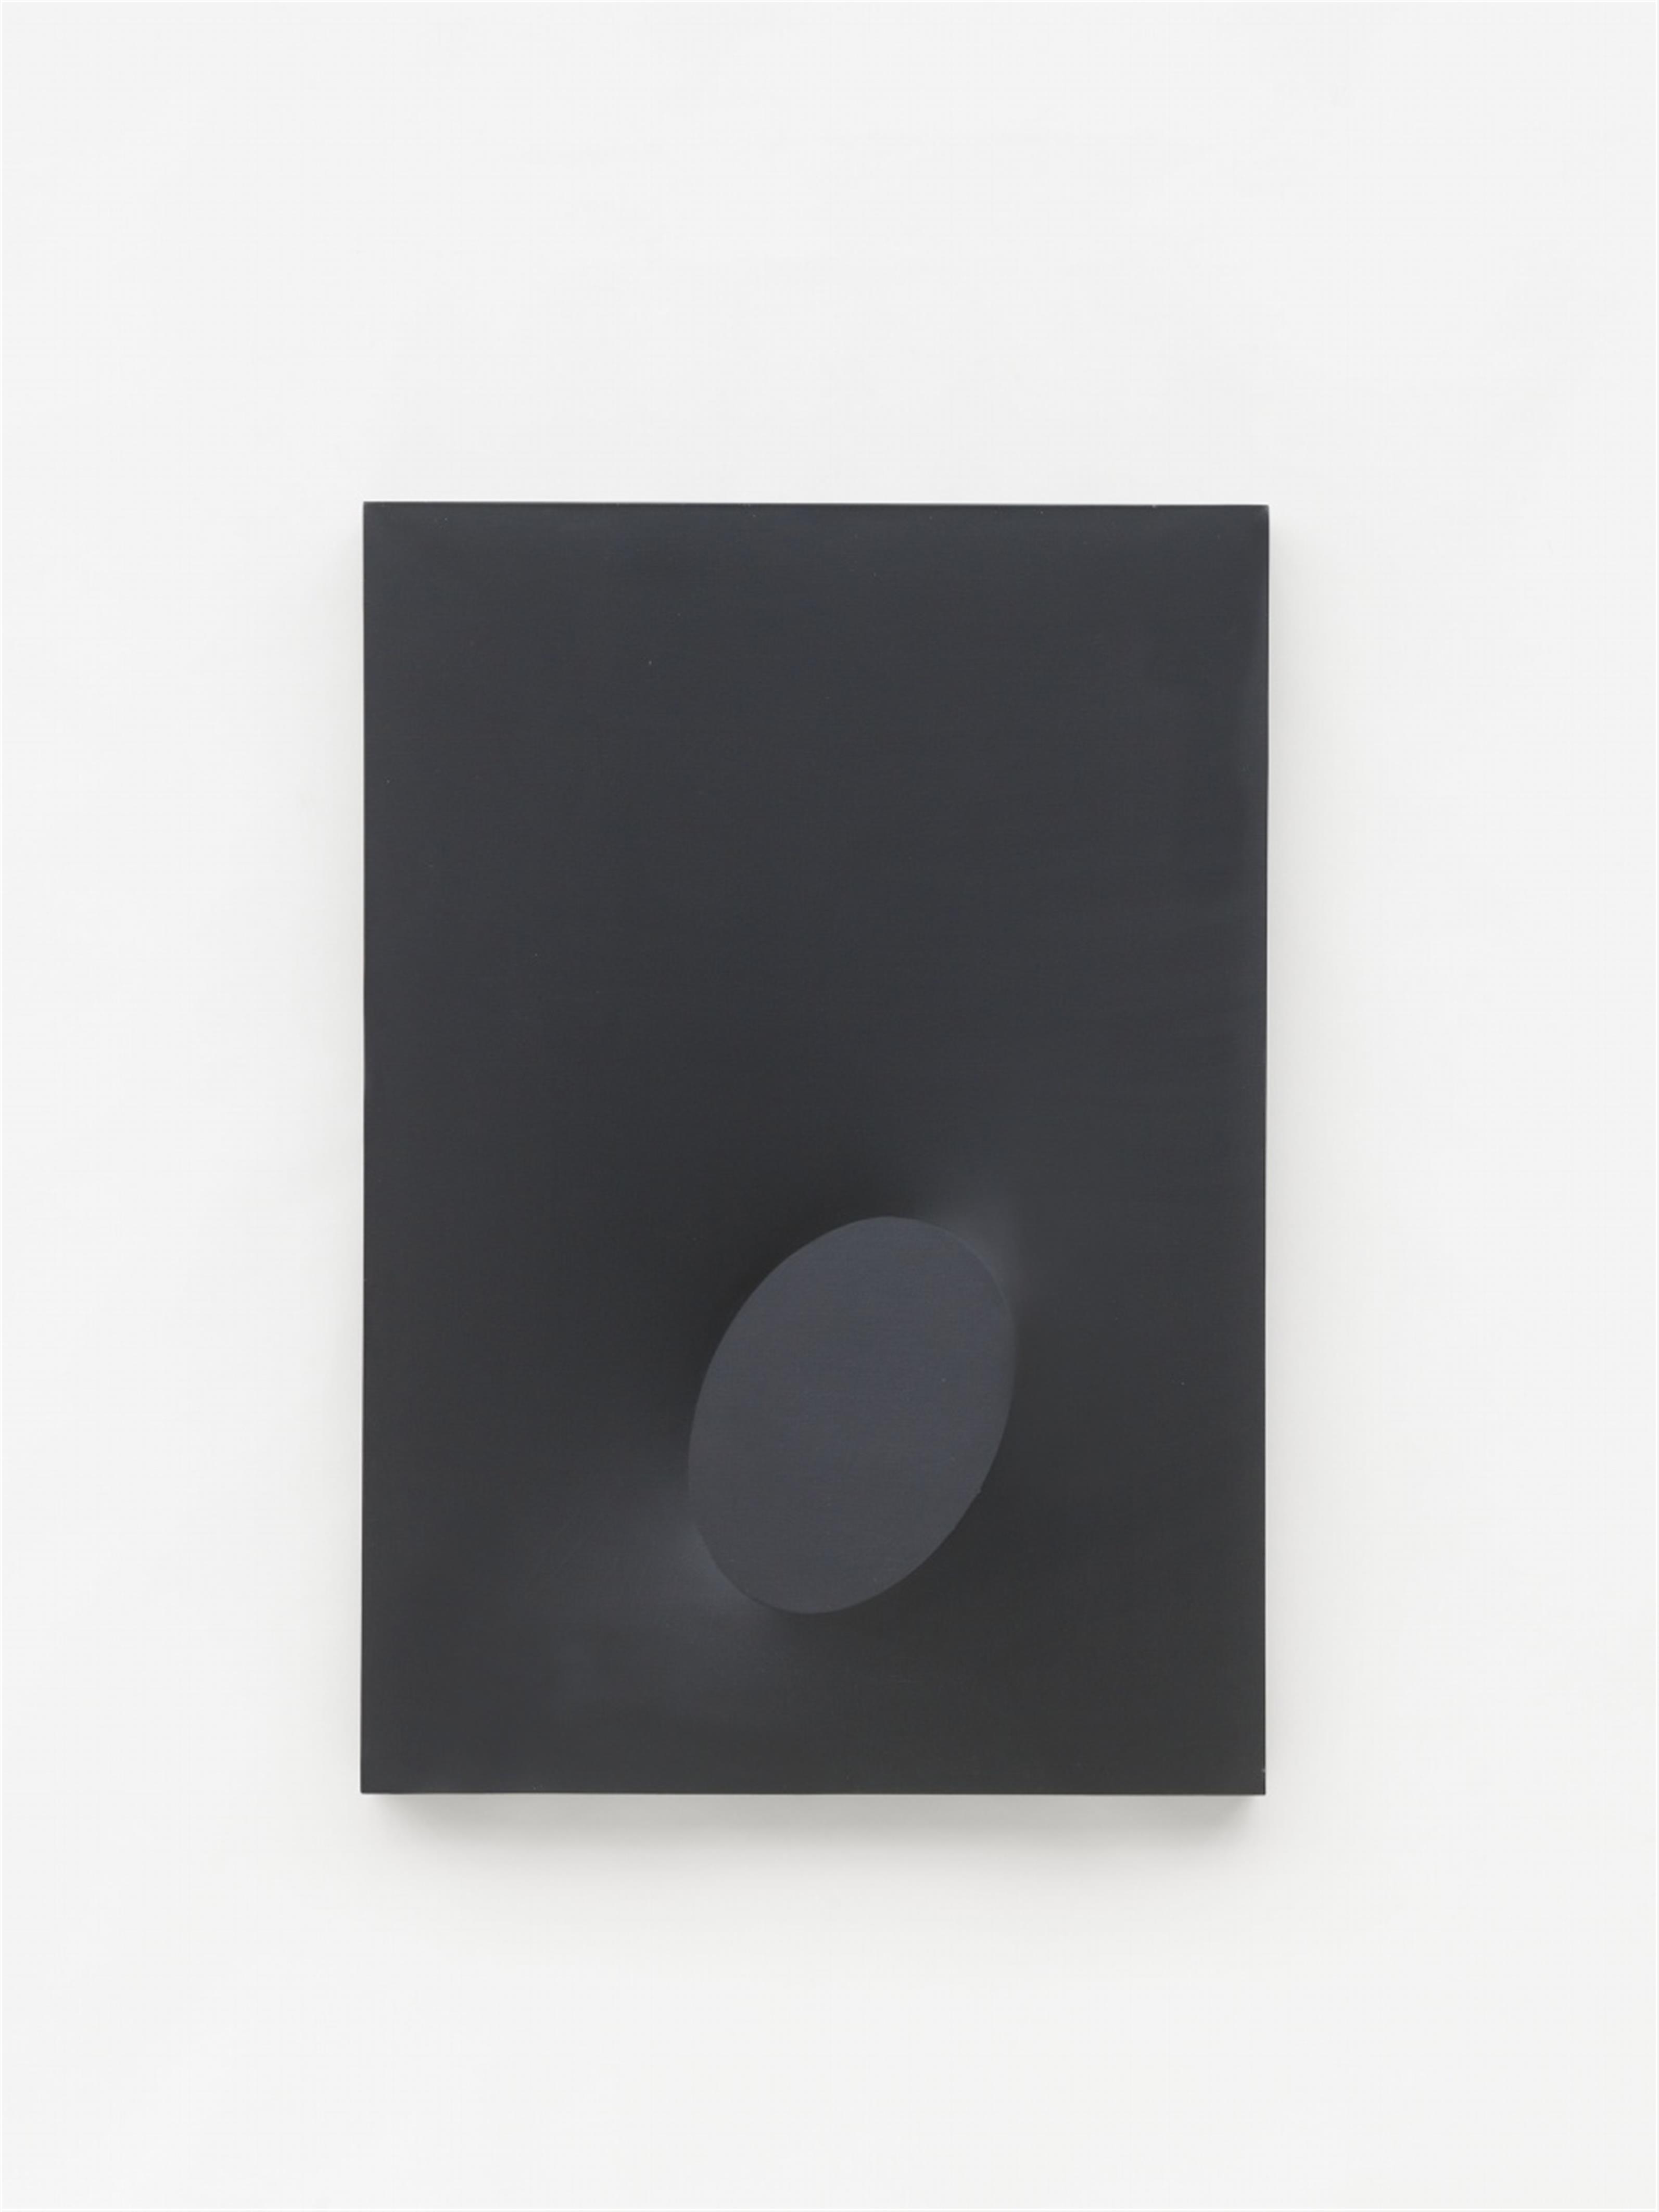 Turi Simeti - Untitled (Un ovale nero) - image-1